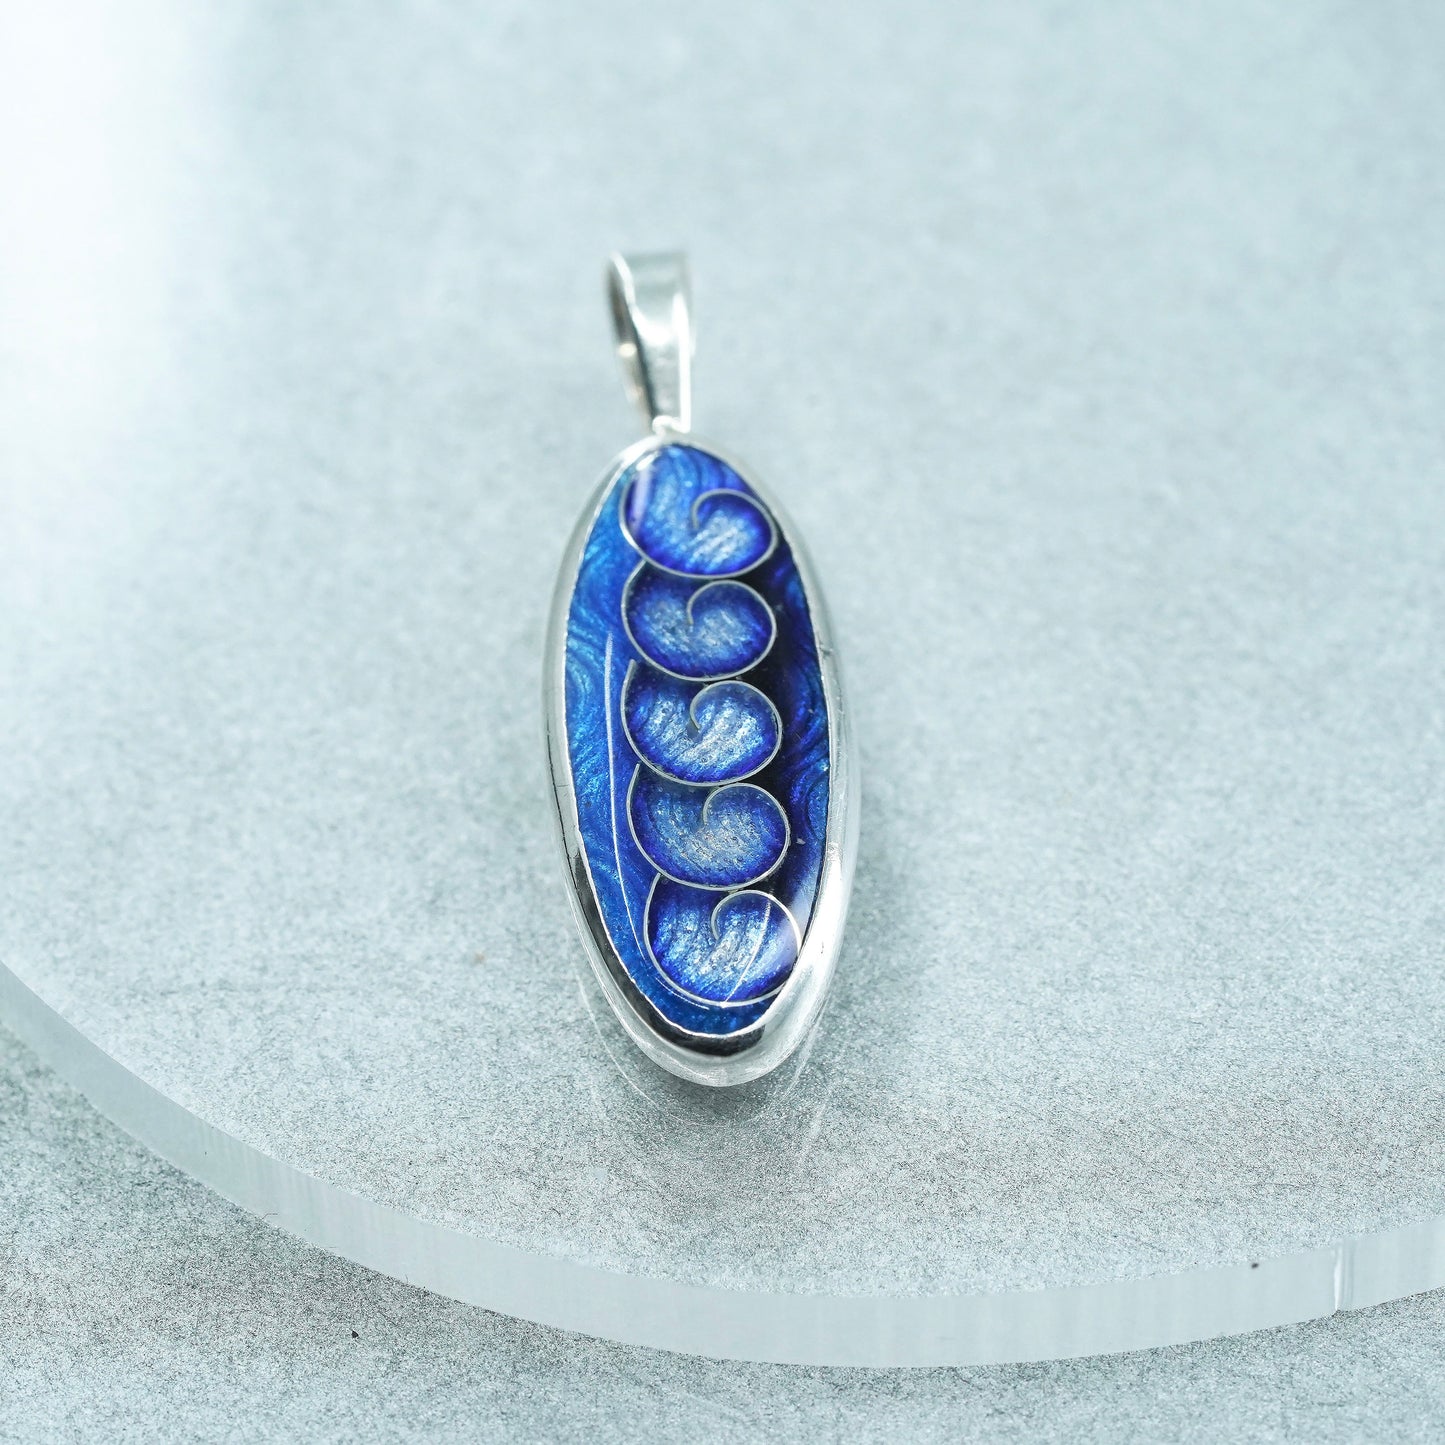 Vintage sterling 925 silver handmade blue enamel tag pendant